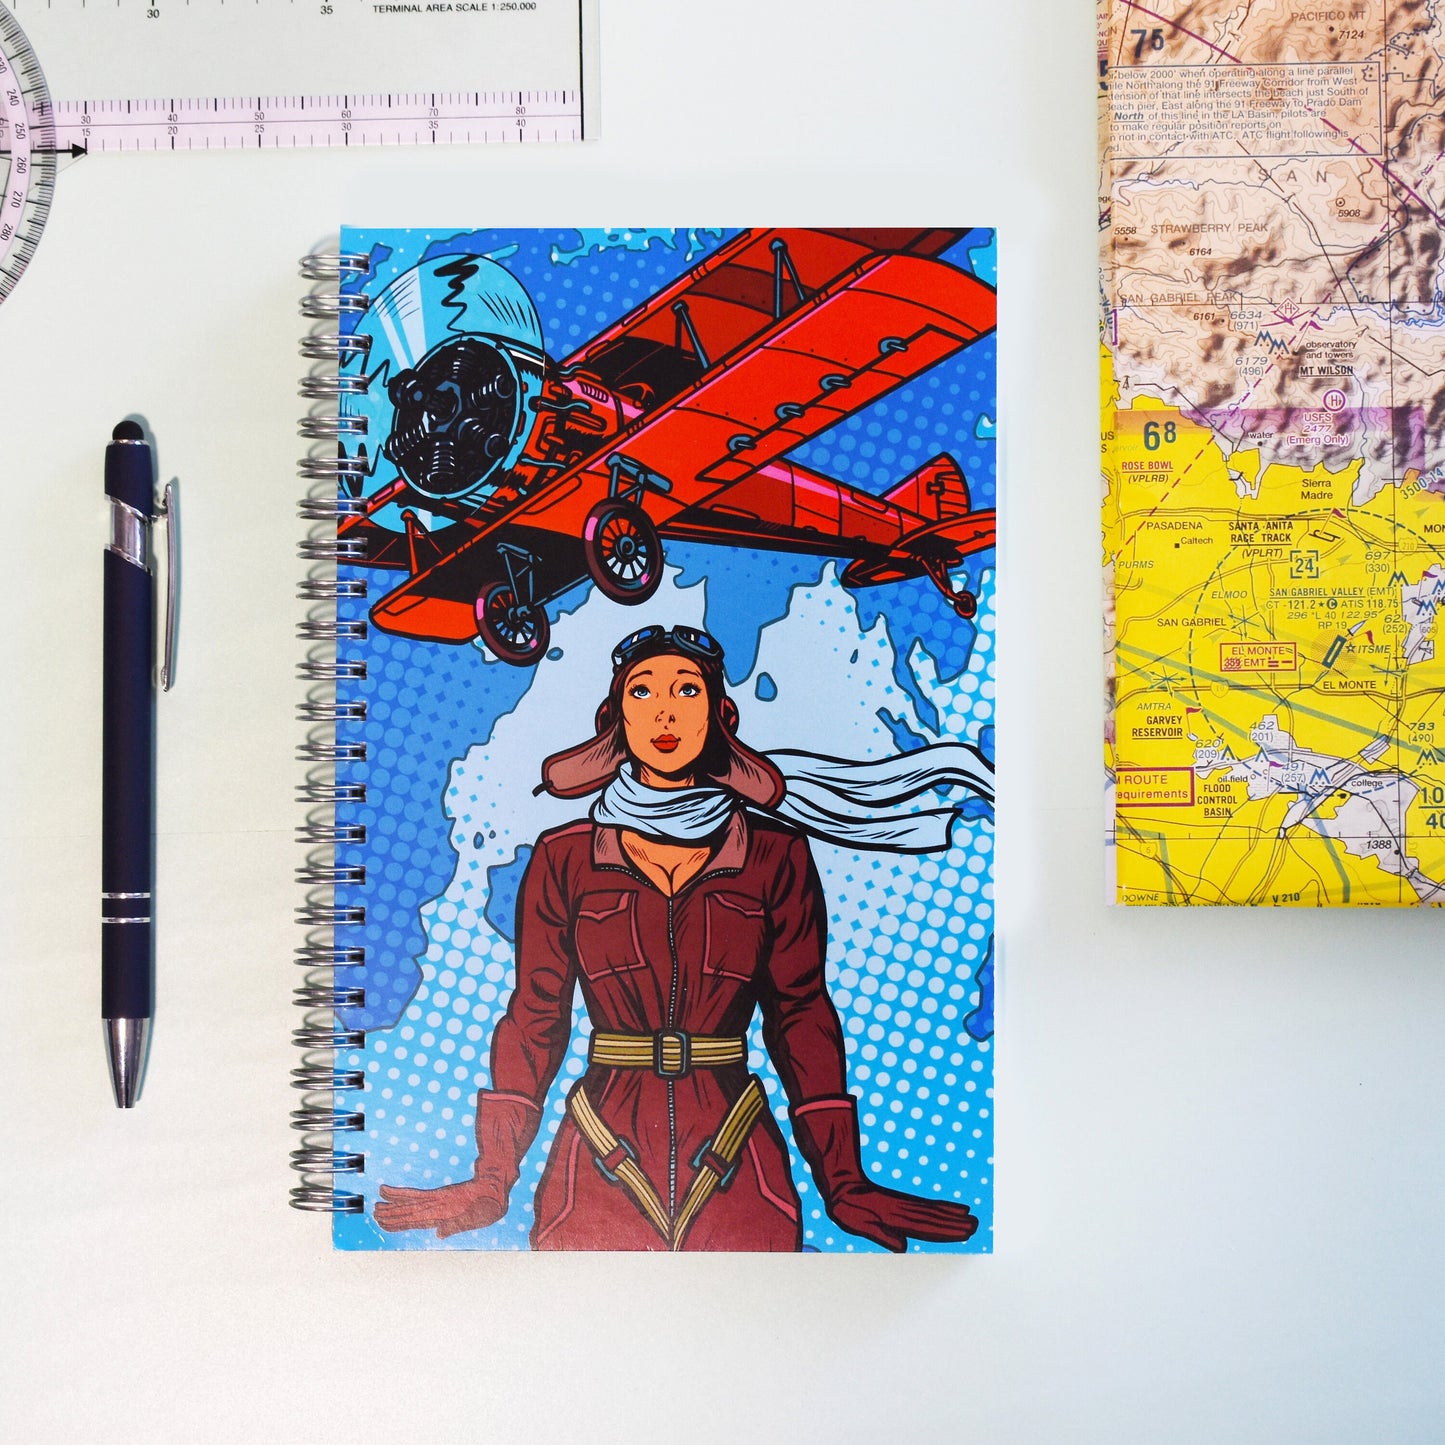 Imagine Flying the World Spiral Notebook - Female Pilot - Pop Art